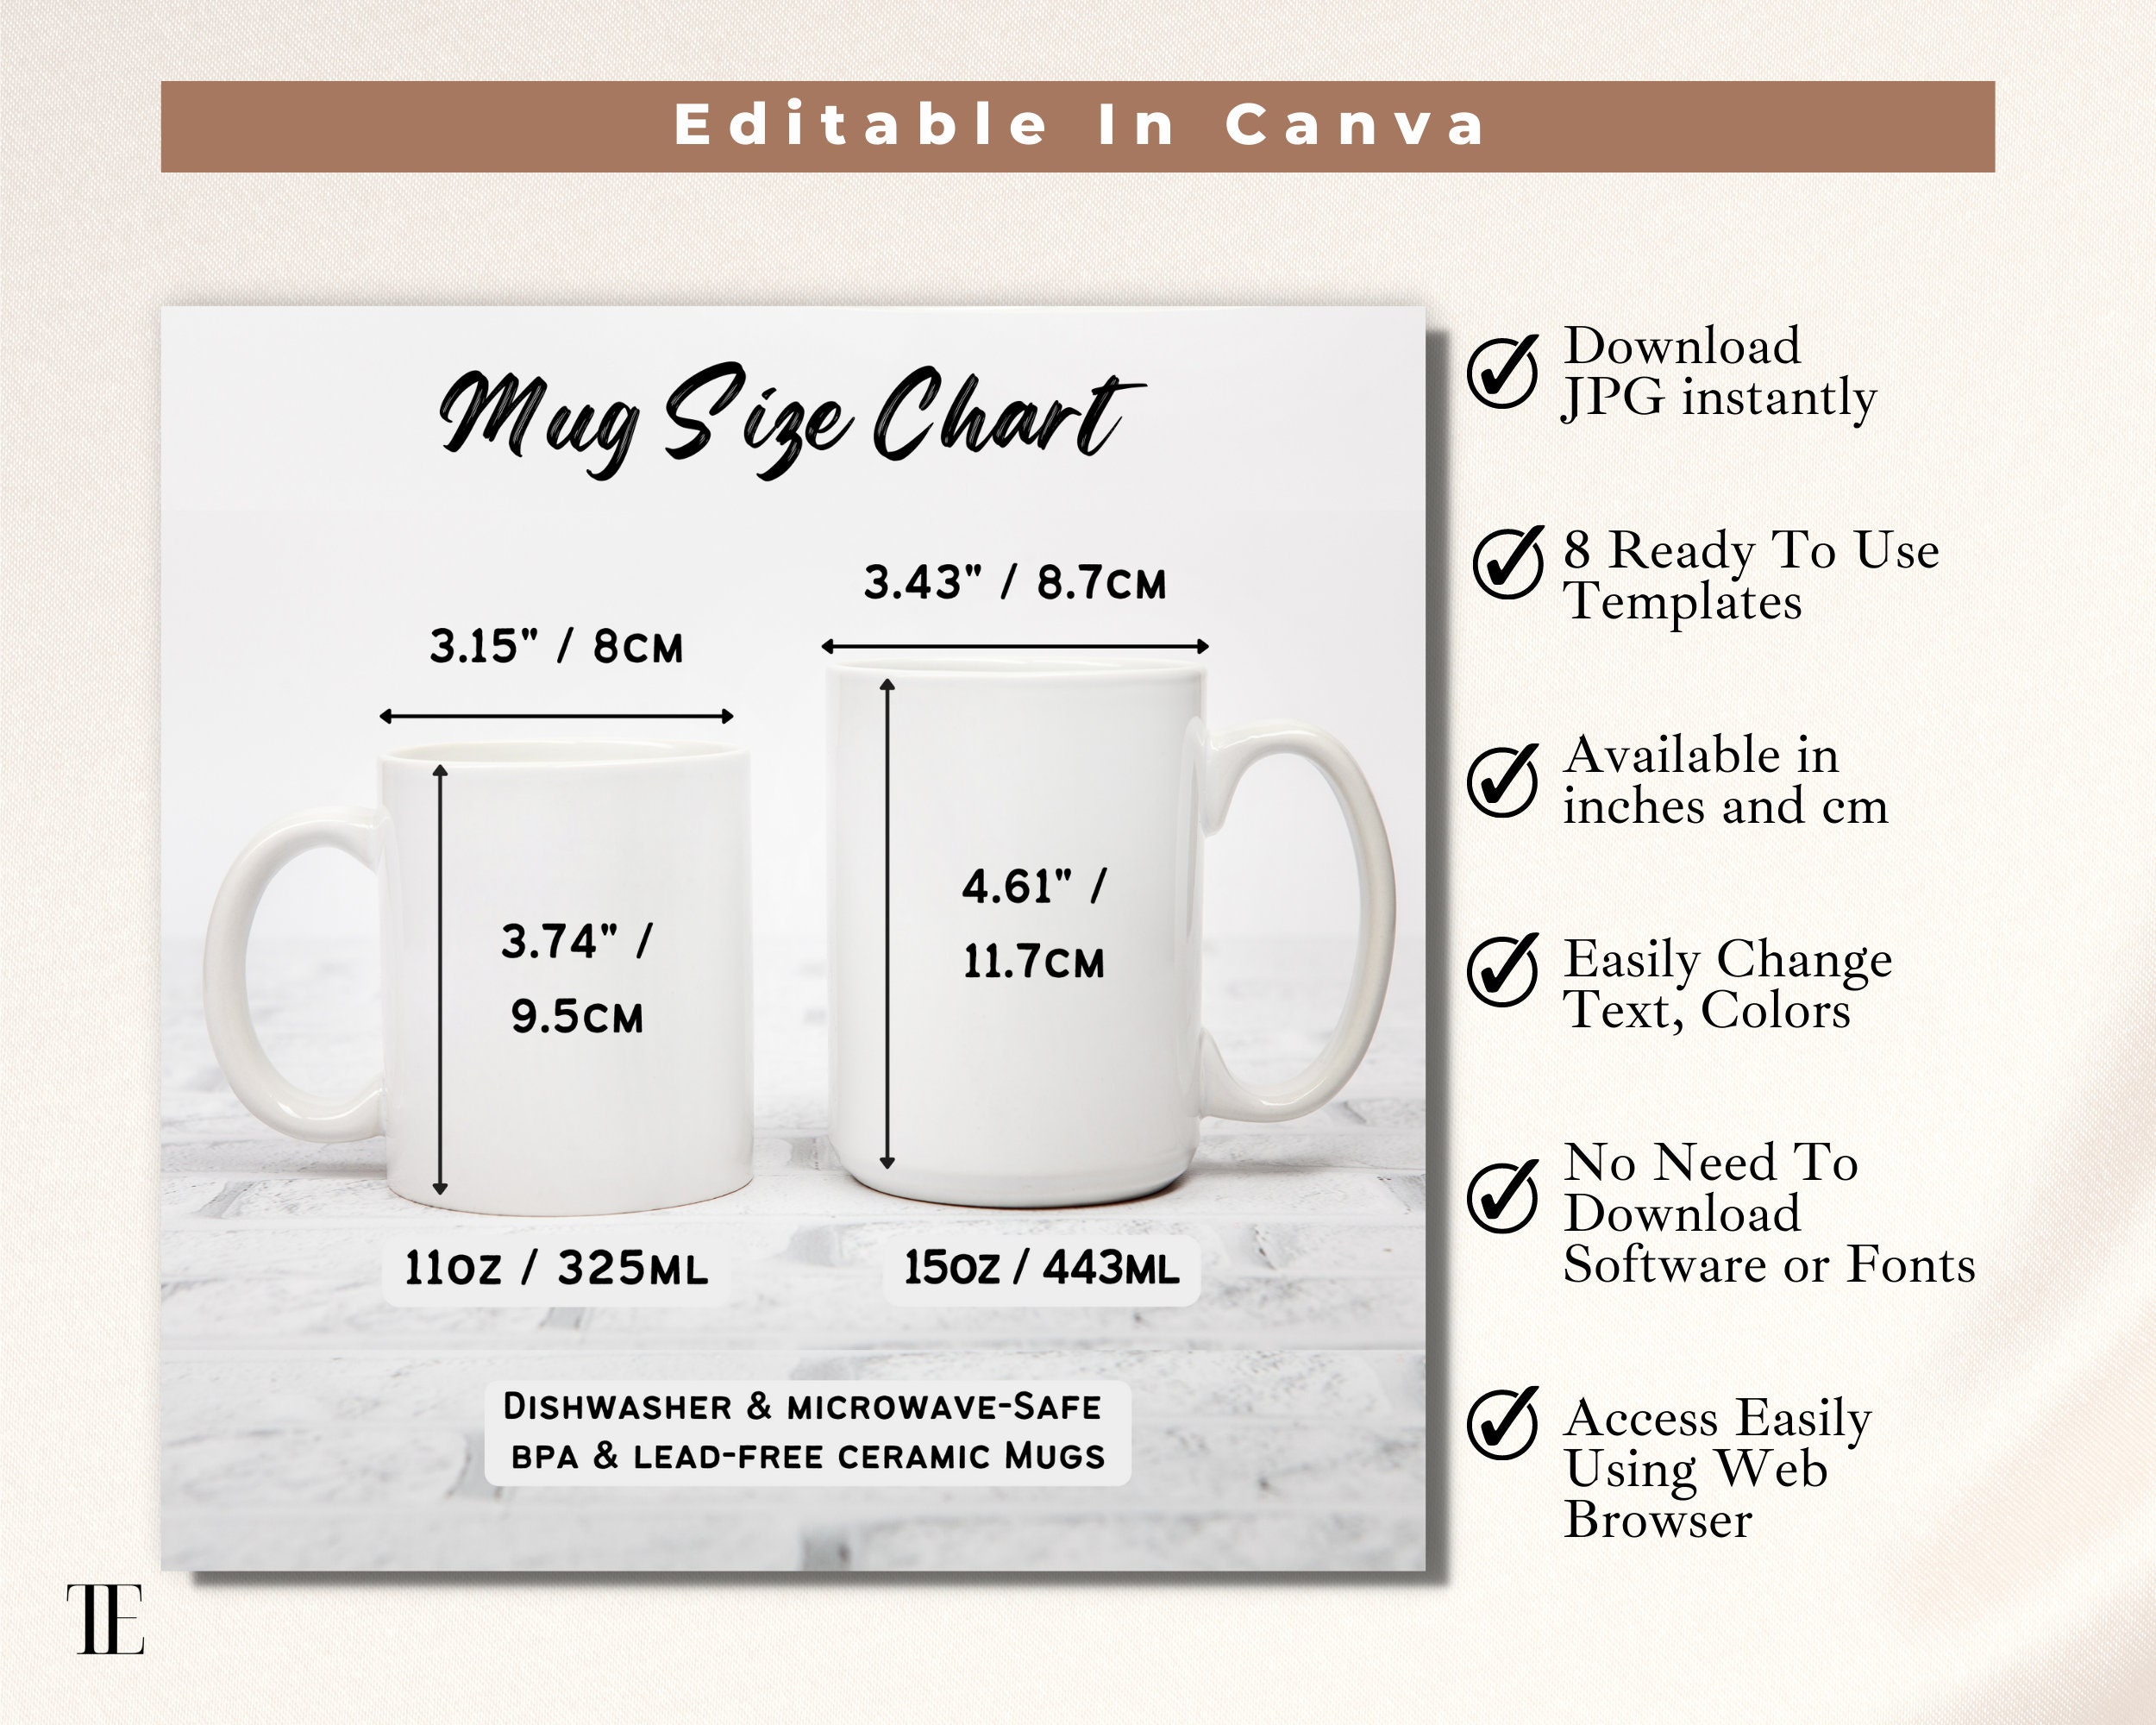 mug-size-mockup-bundle-coffee-mug-size-chart-11oz-and-15oz-comparison